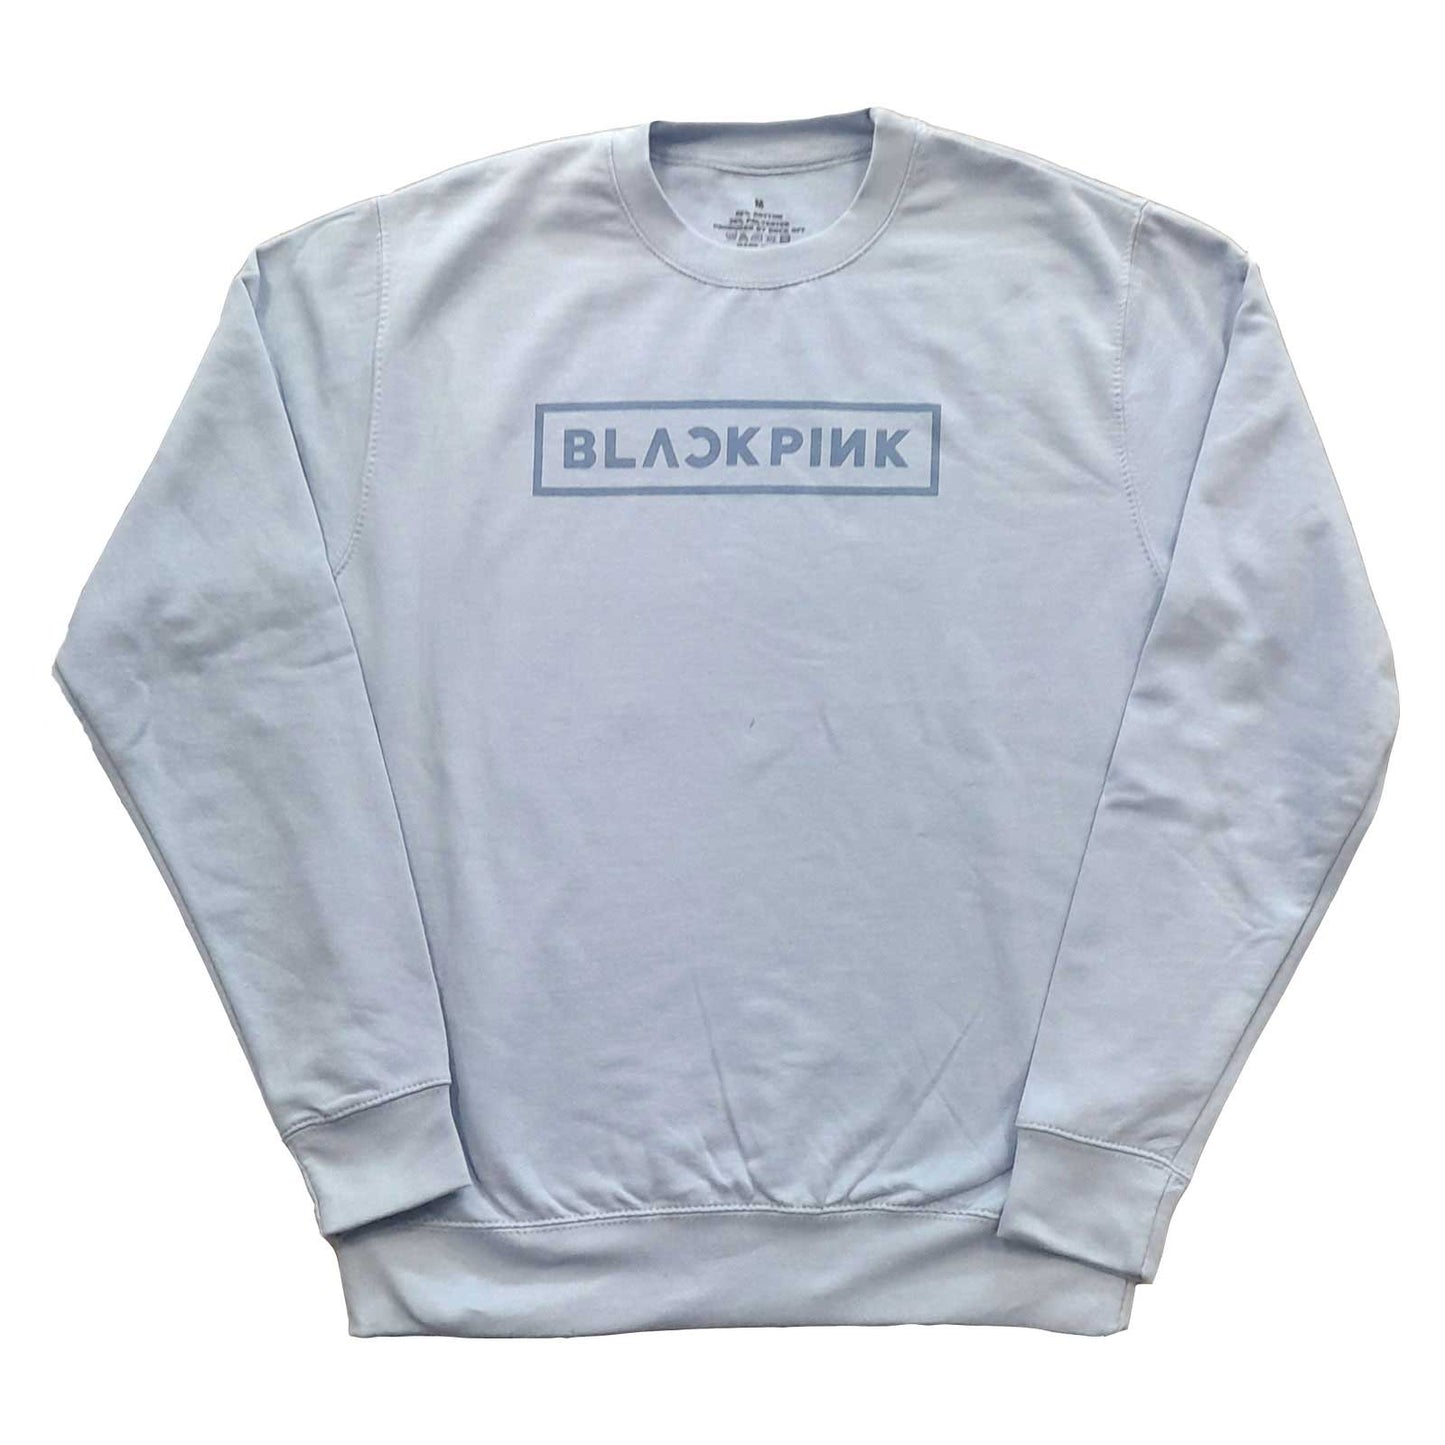 BlackPink Logo Sweatshirt Blue